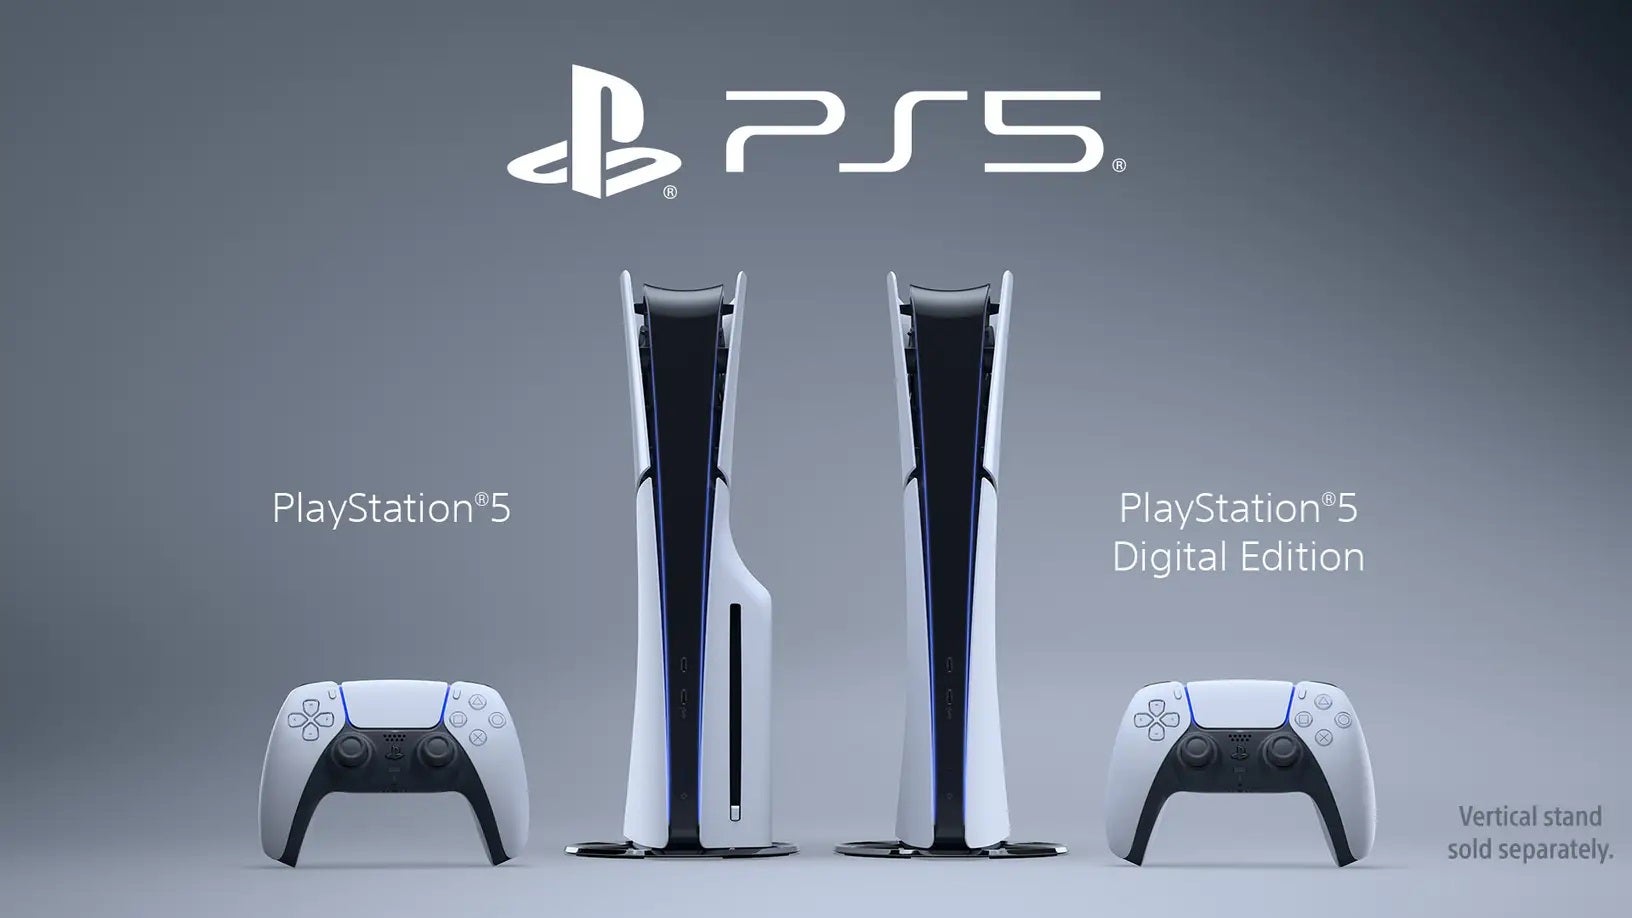 PlayStation 5 Slim model release date seemingly leaks | Eurogamer.net